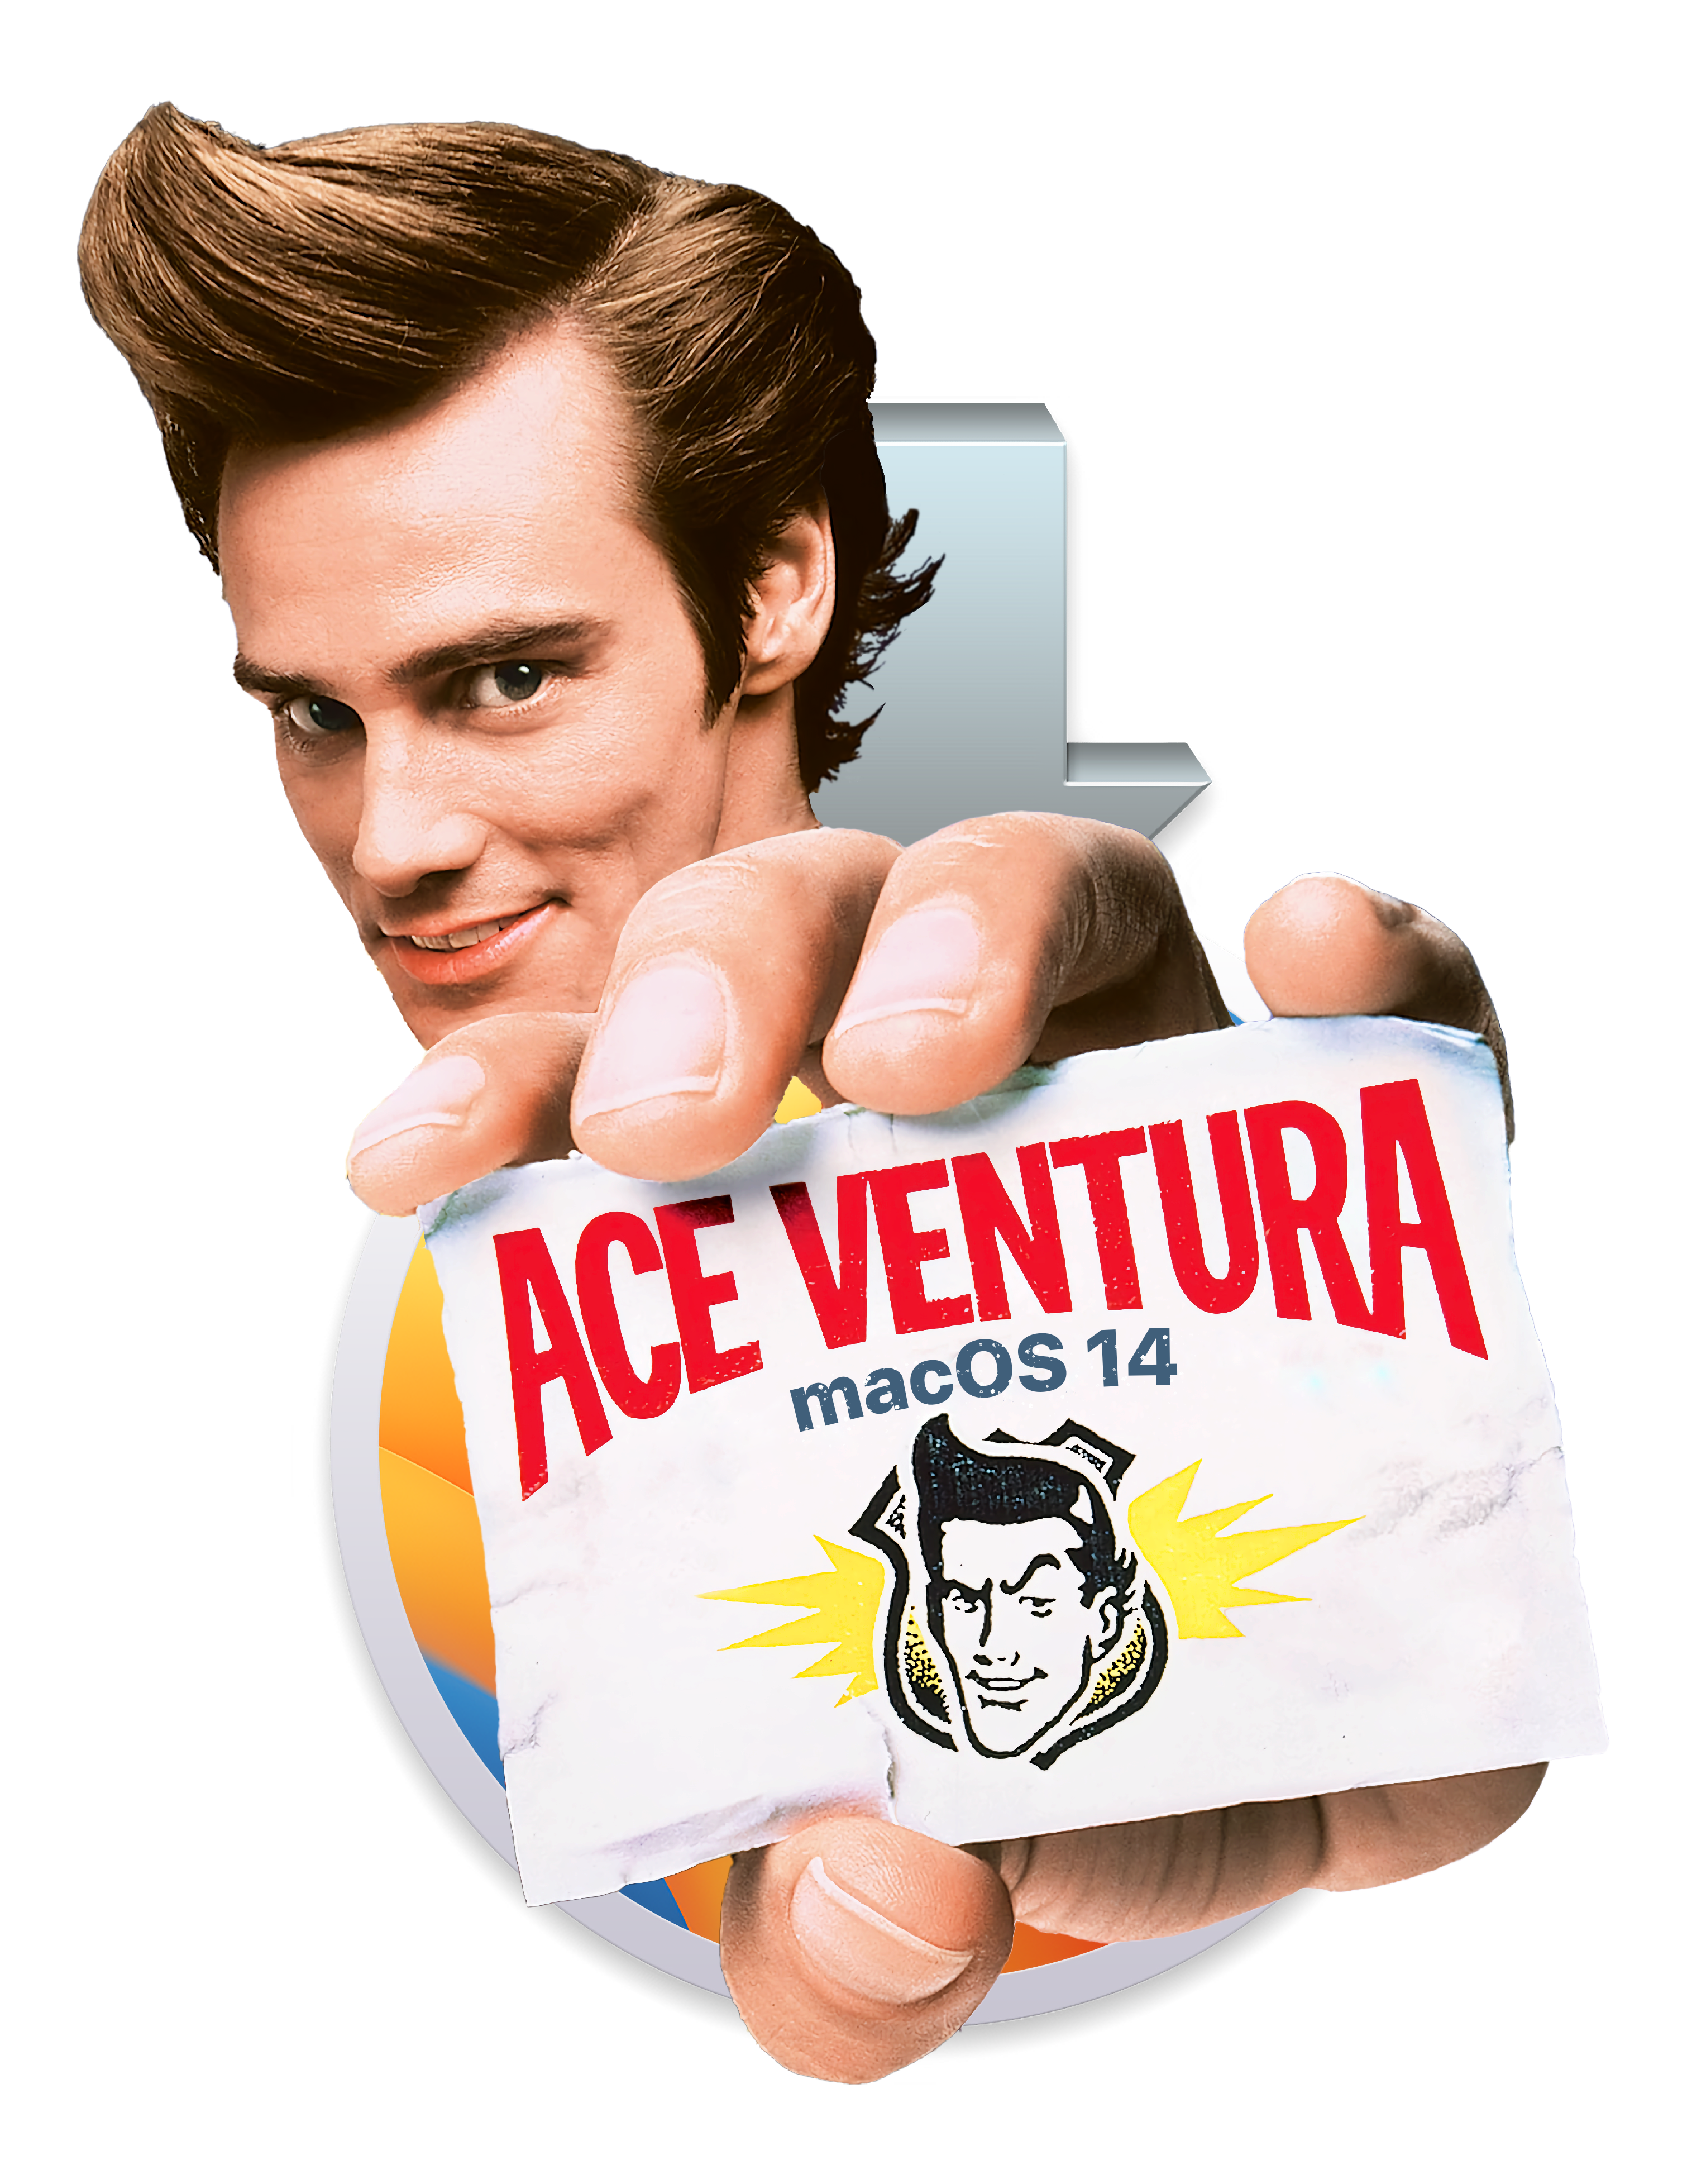 macOS 14 Ace Ventura install icon